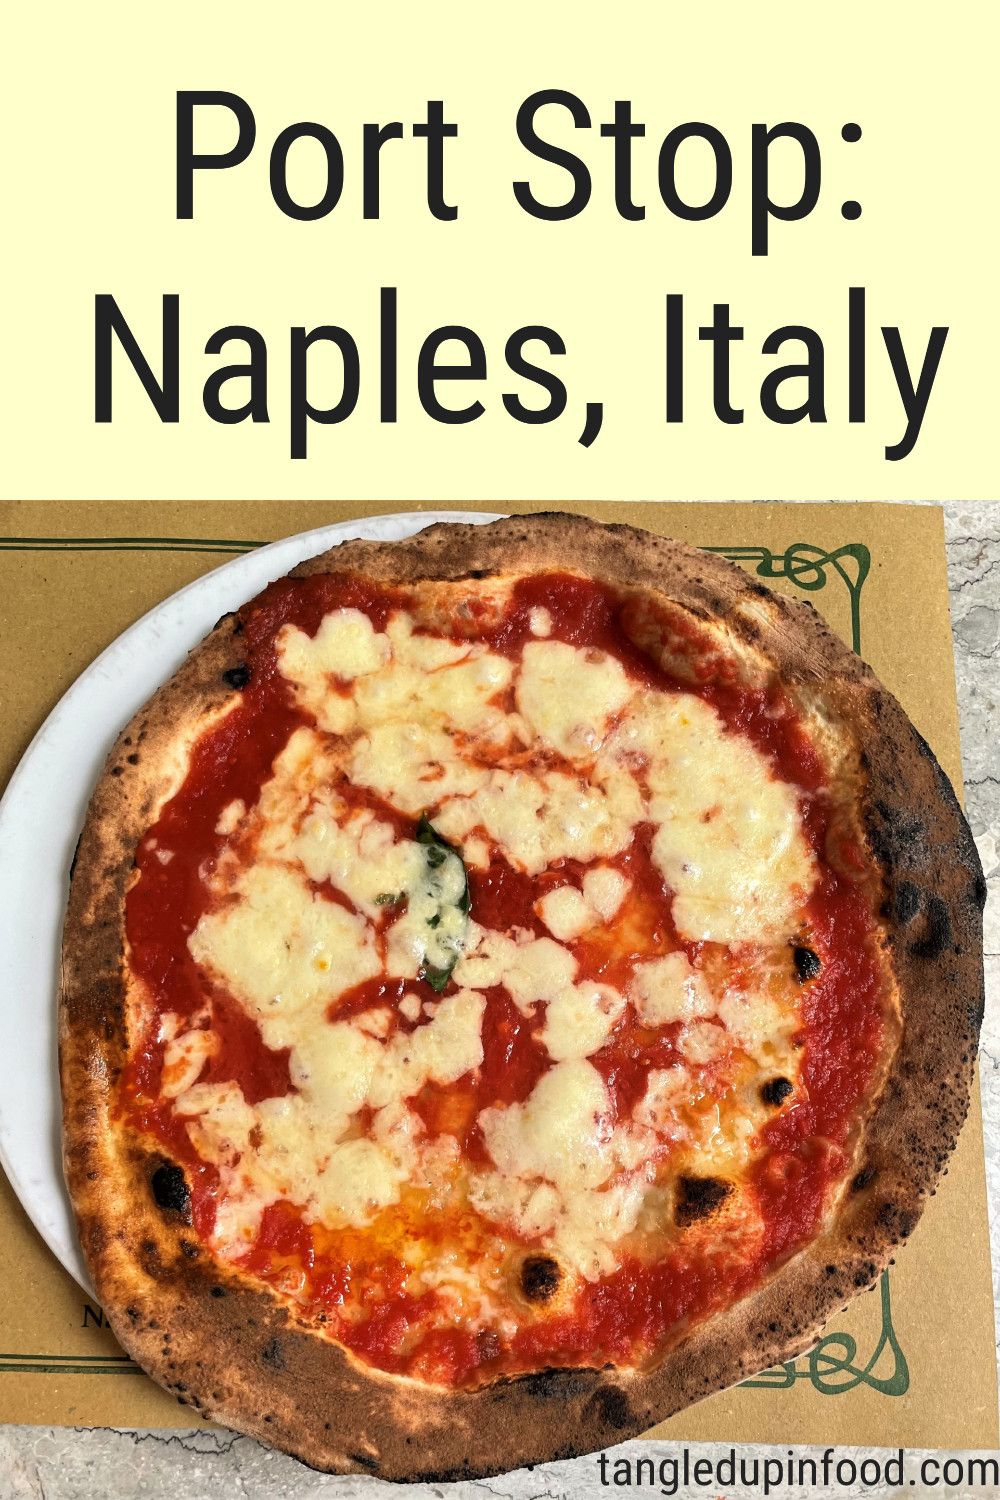 Photo of Neapolitan pizza with text reading "Port Stop: Naples, Italy"